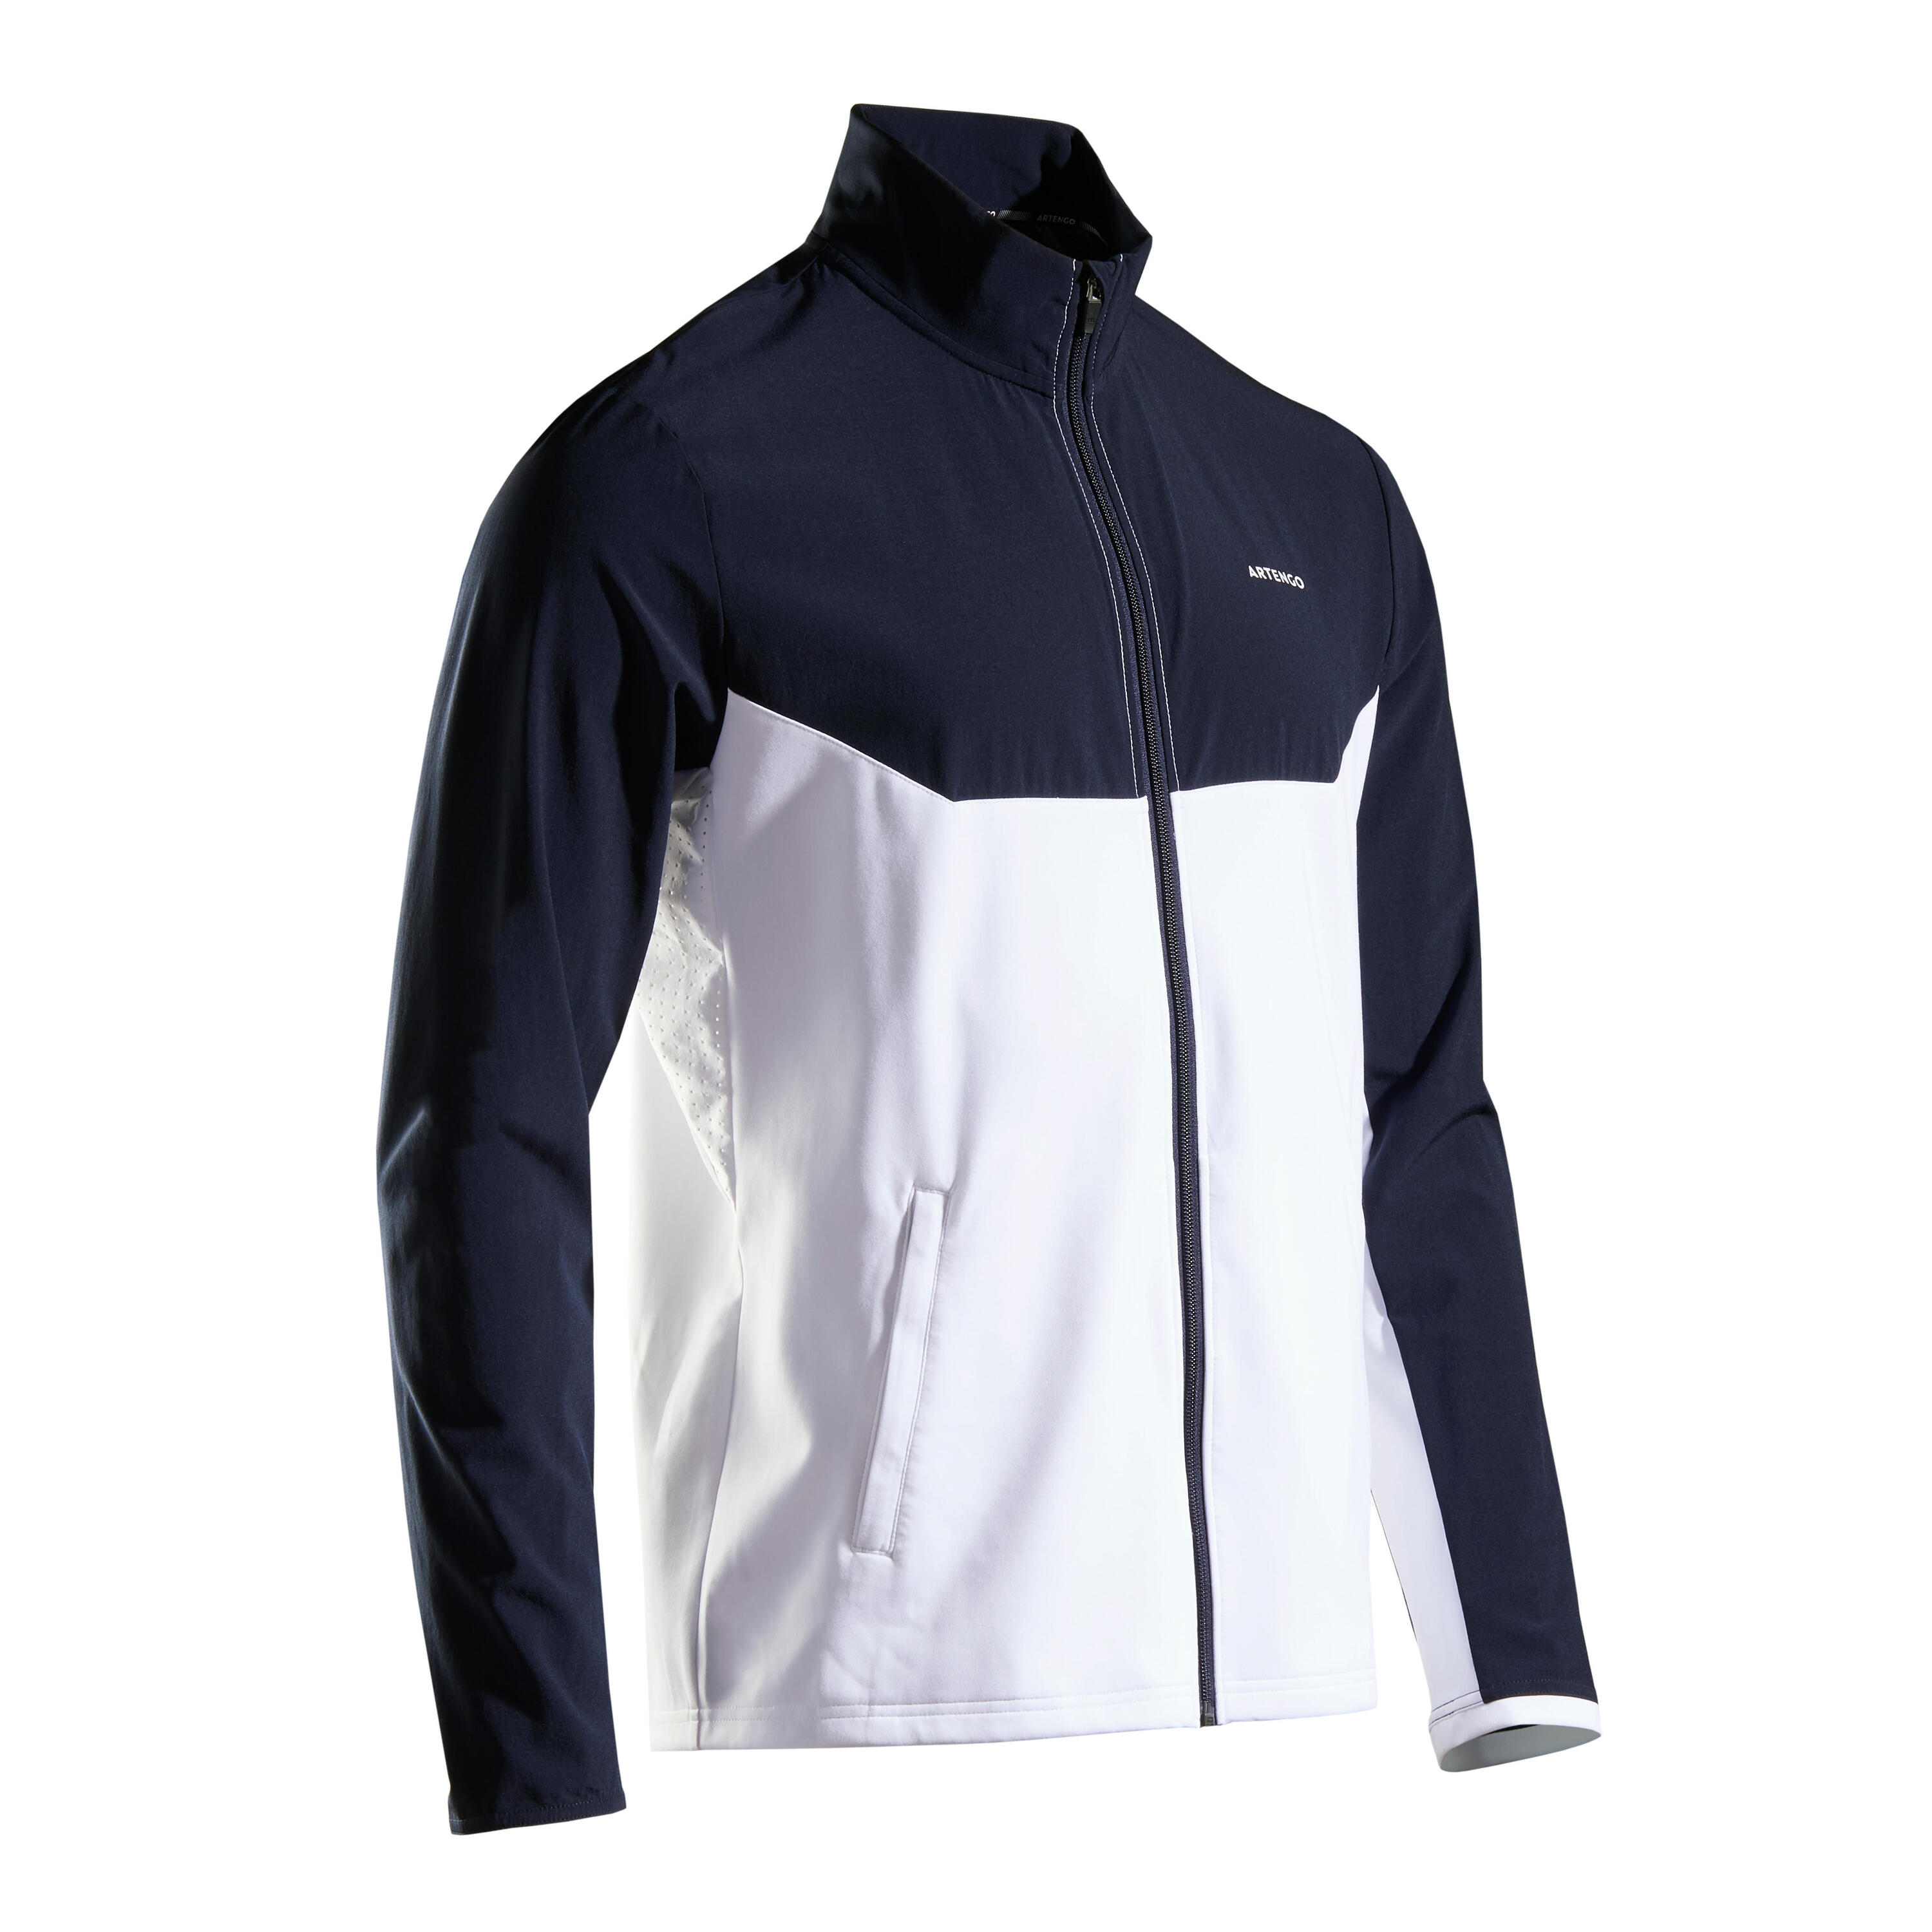 Men's Tennis Jacket Essential - Blue/White 10/10